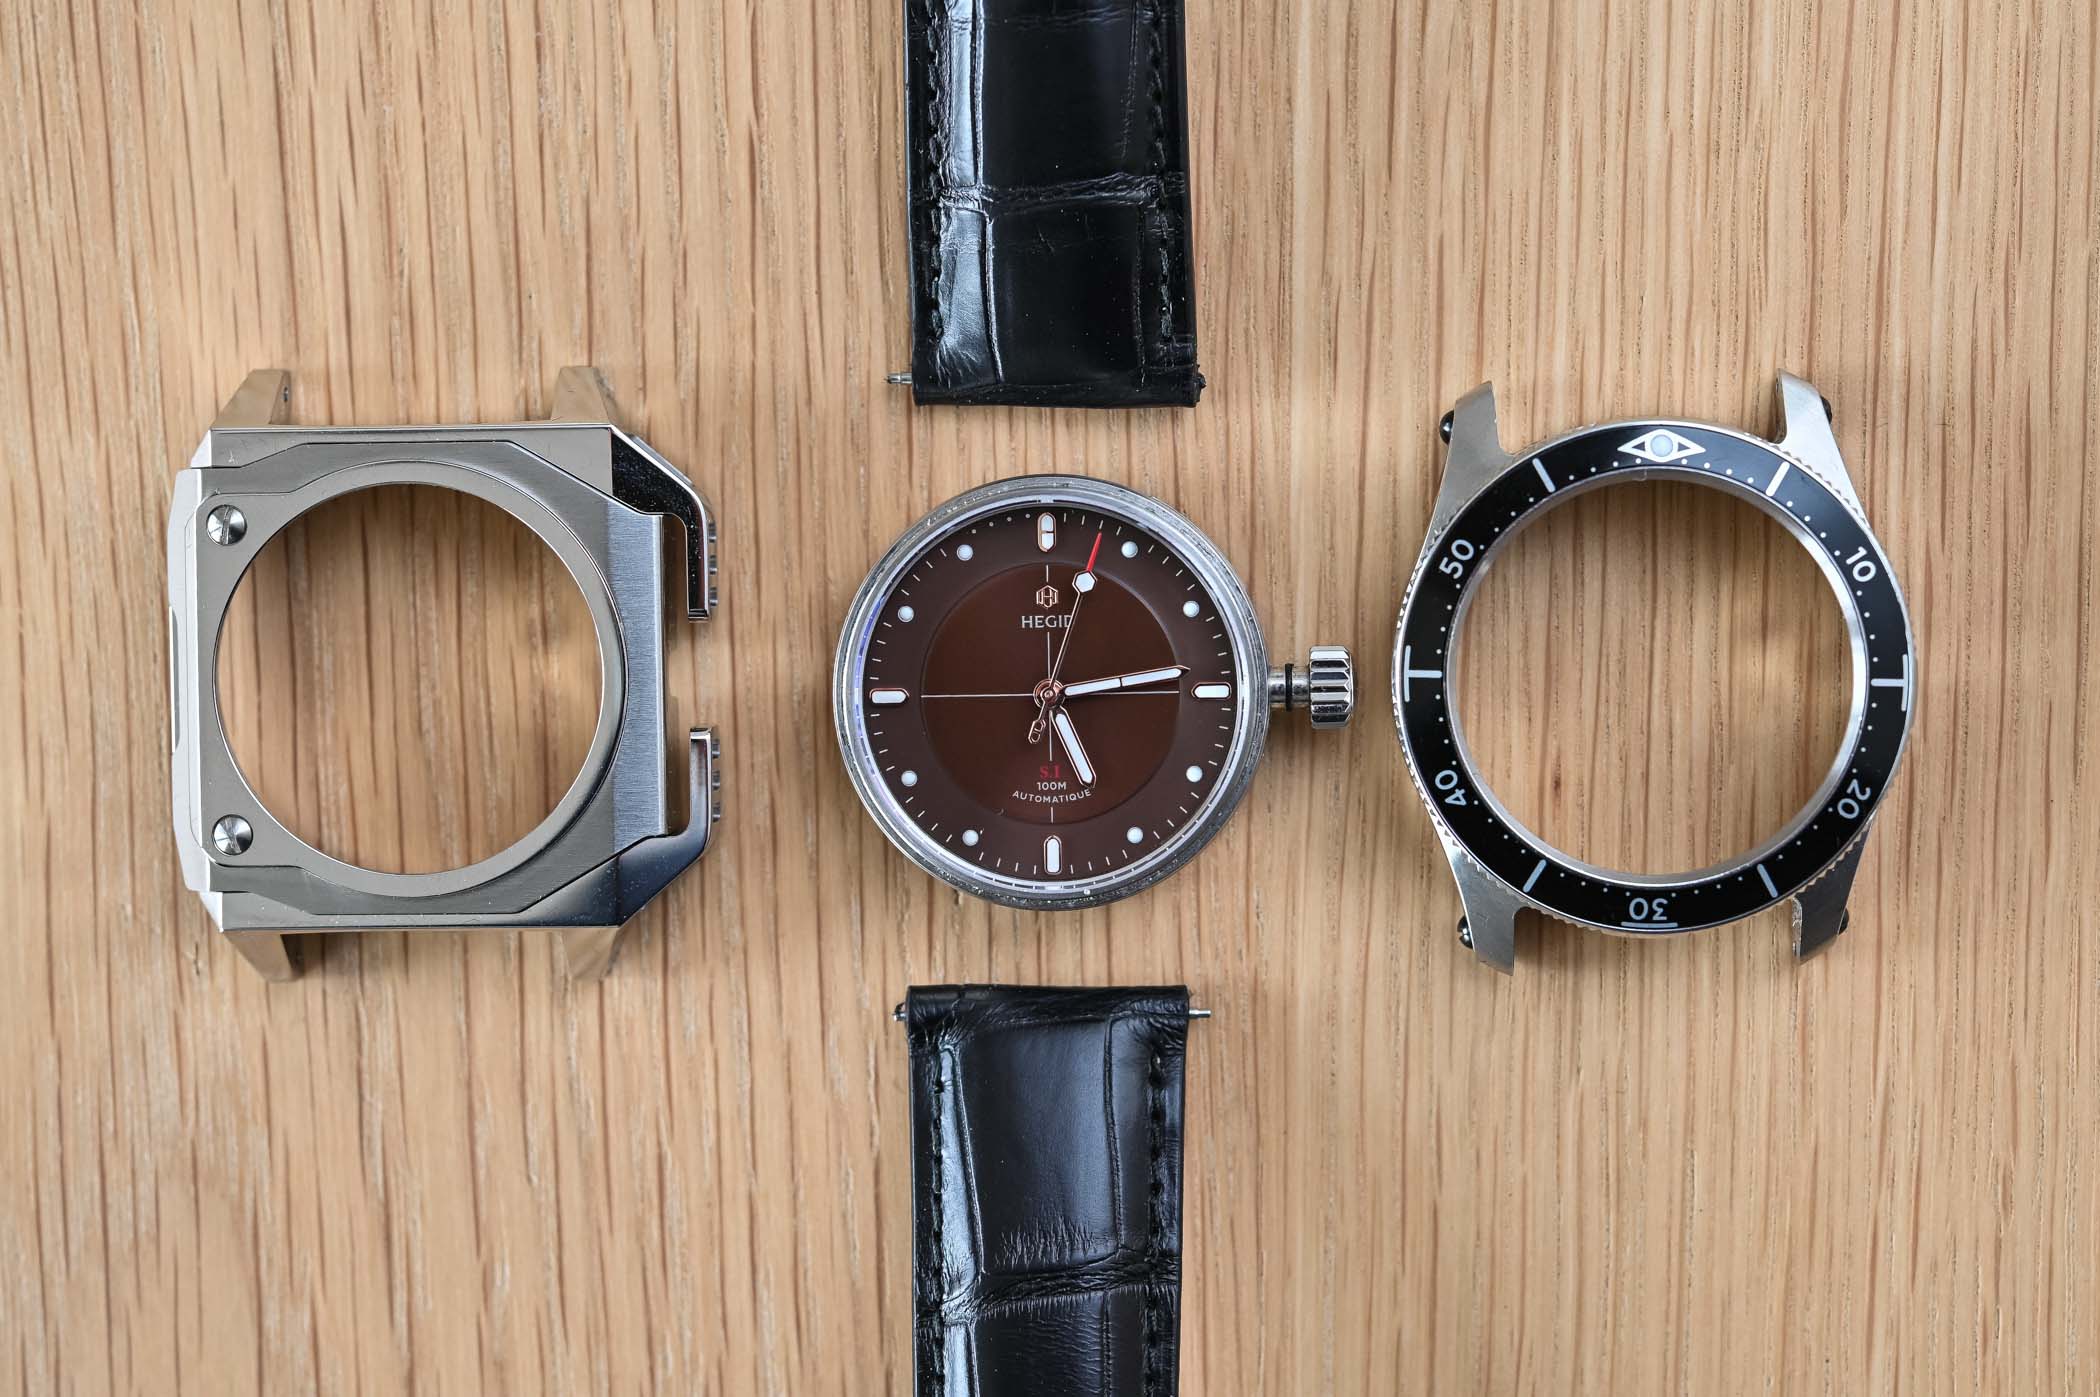 Hegid Watches - Evolutive Customizable watches